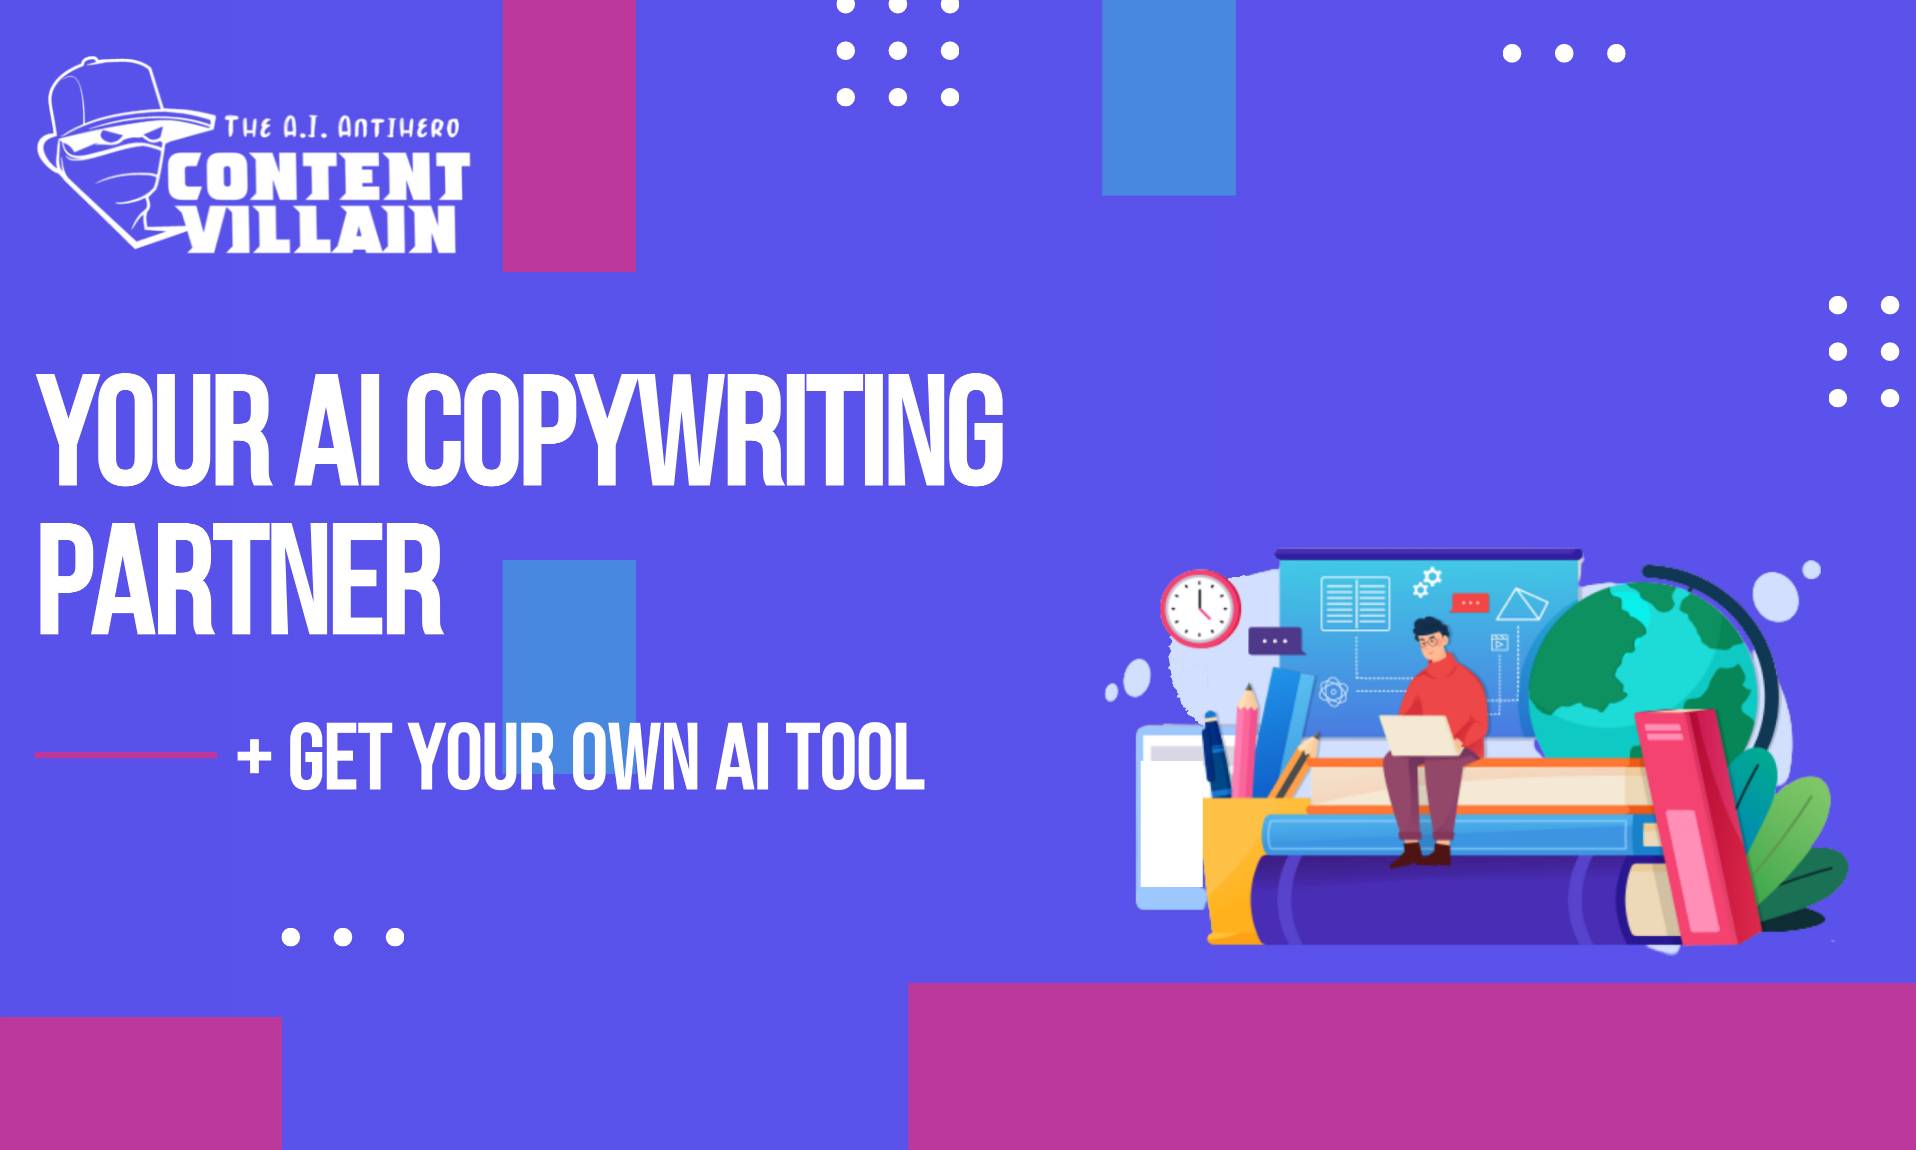 Content Villain - Your AI copywriting partner Get your own AI